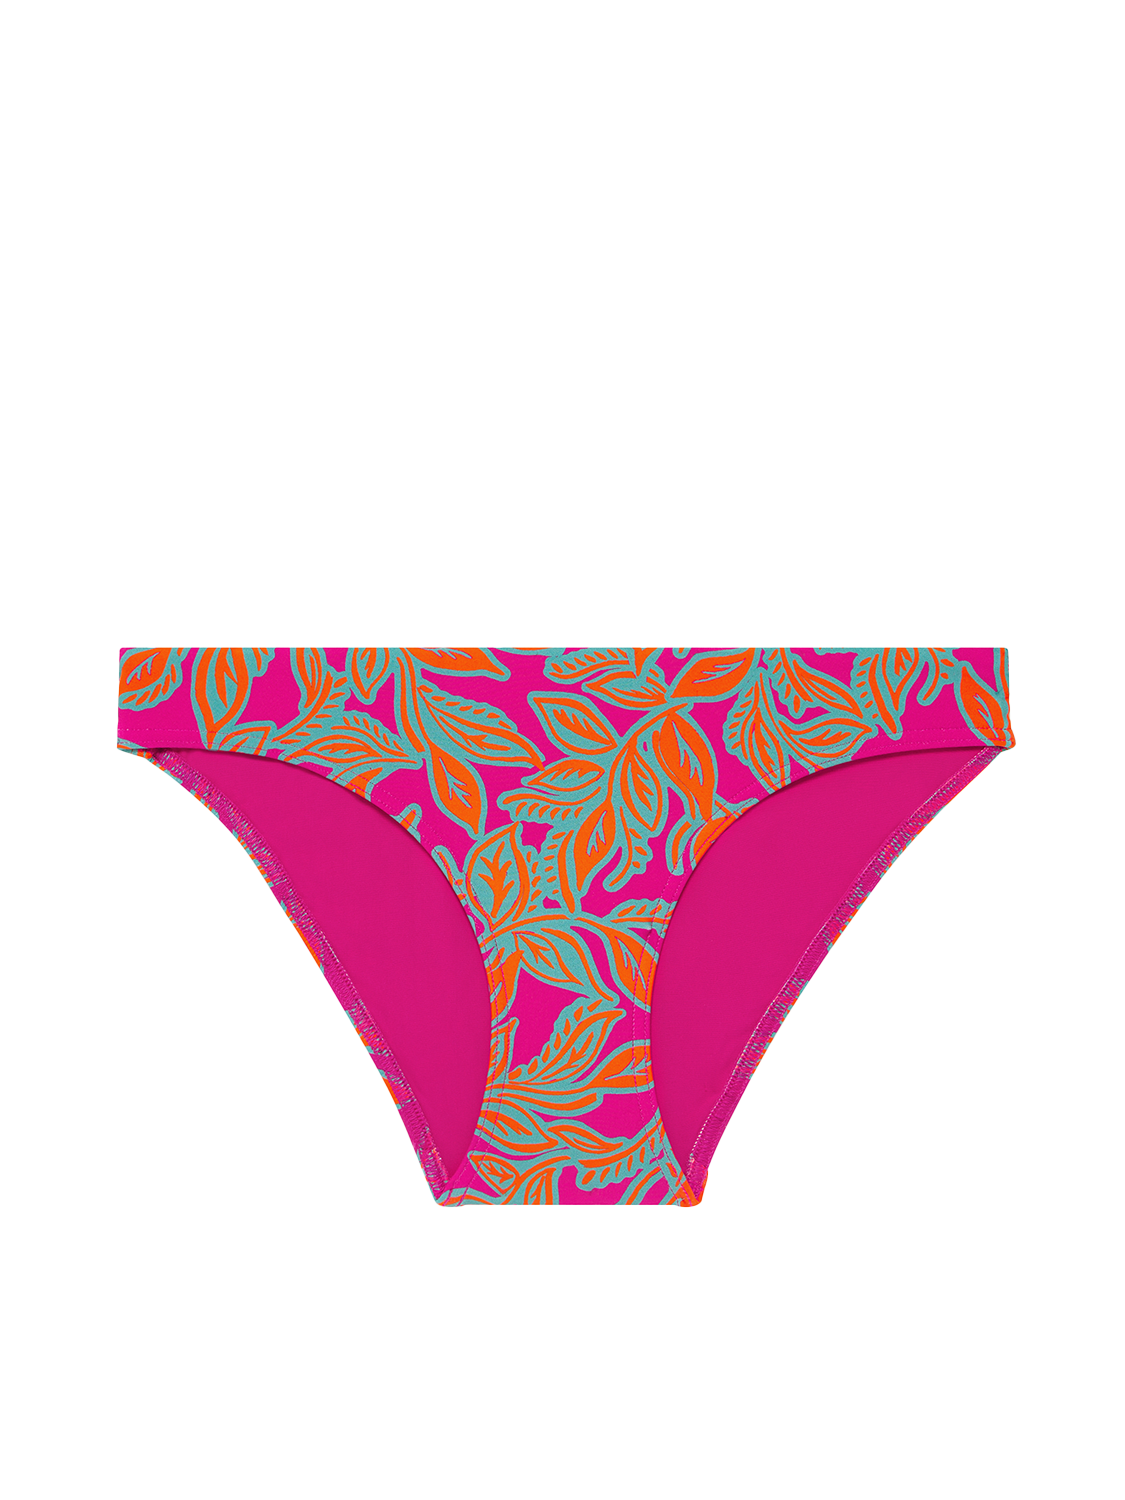 Bikini brief - Menara Pink Print